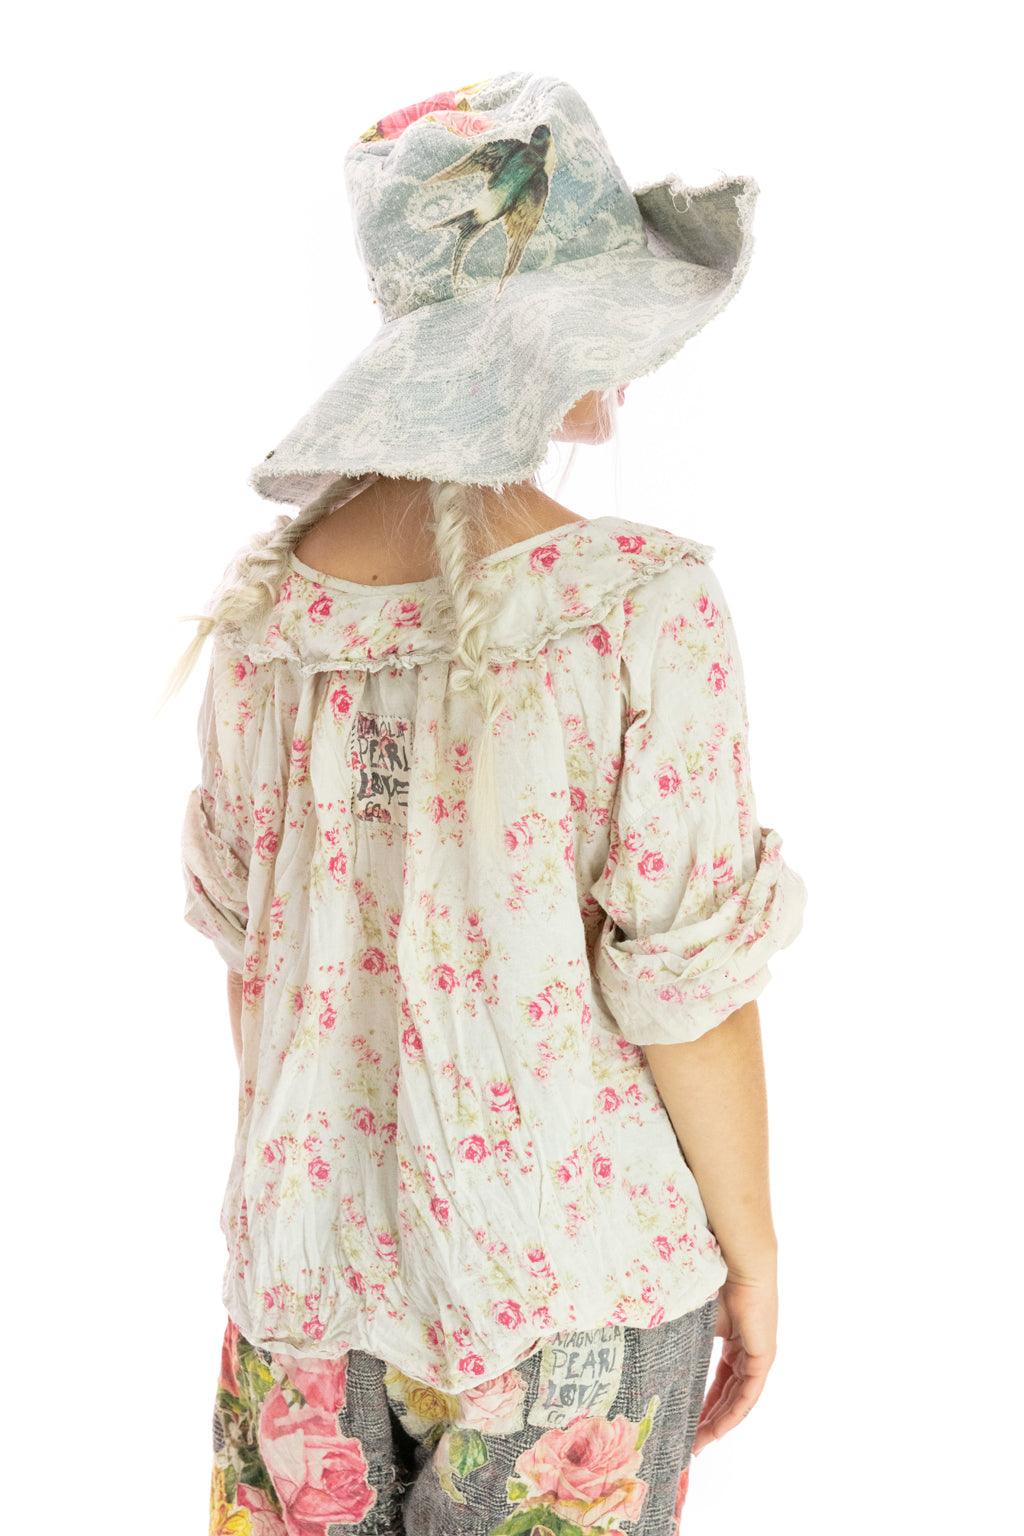 Ana Lucia Layering Blouse - Magnolia Pearl Clothing